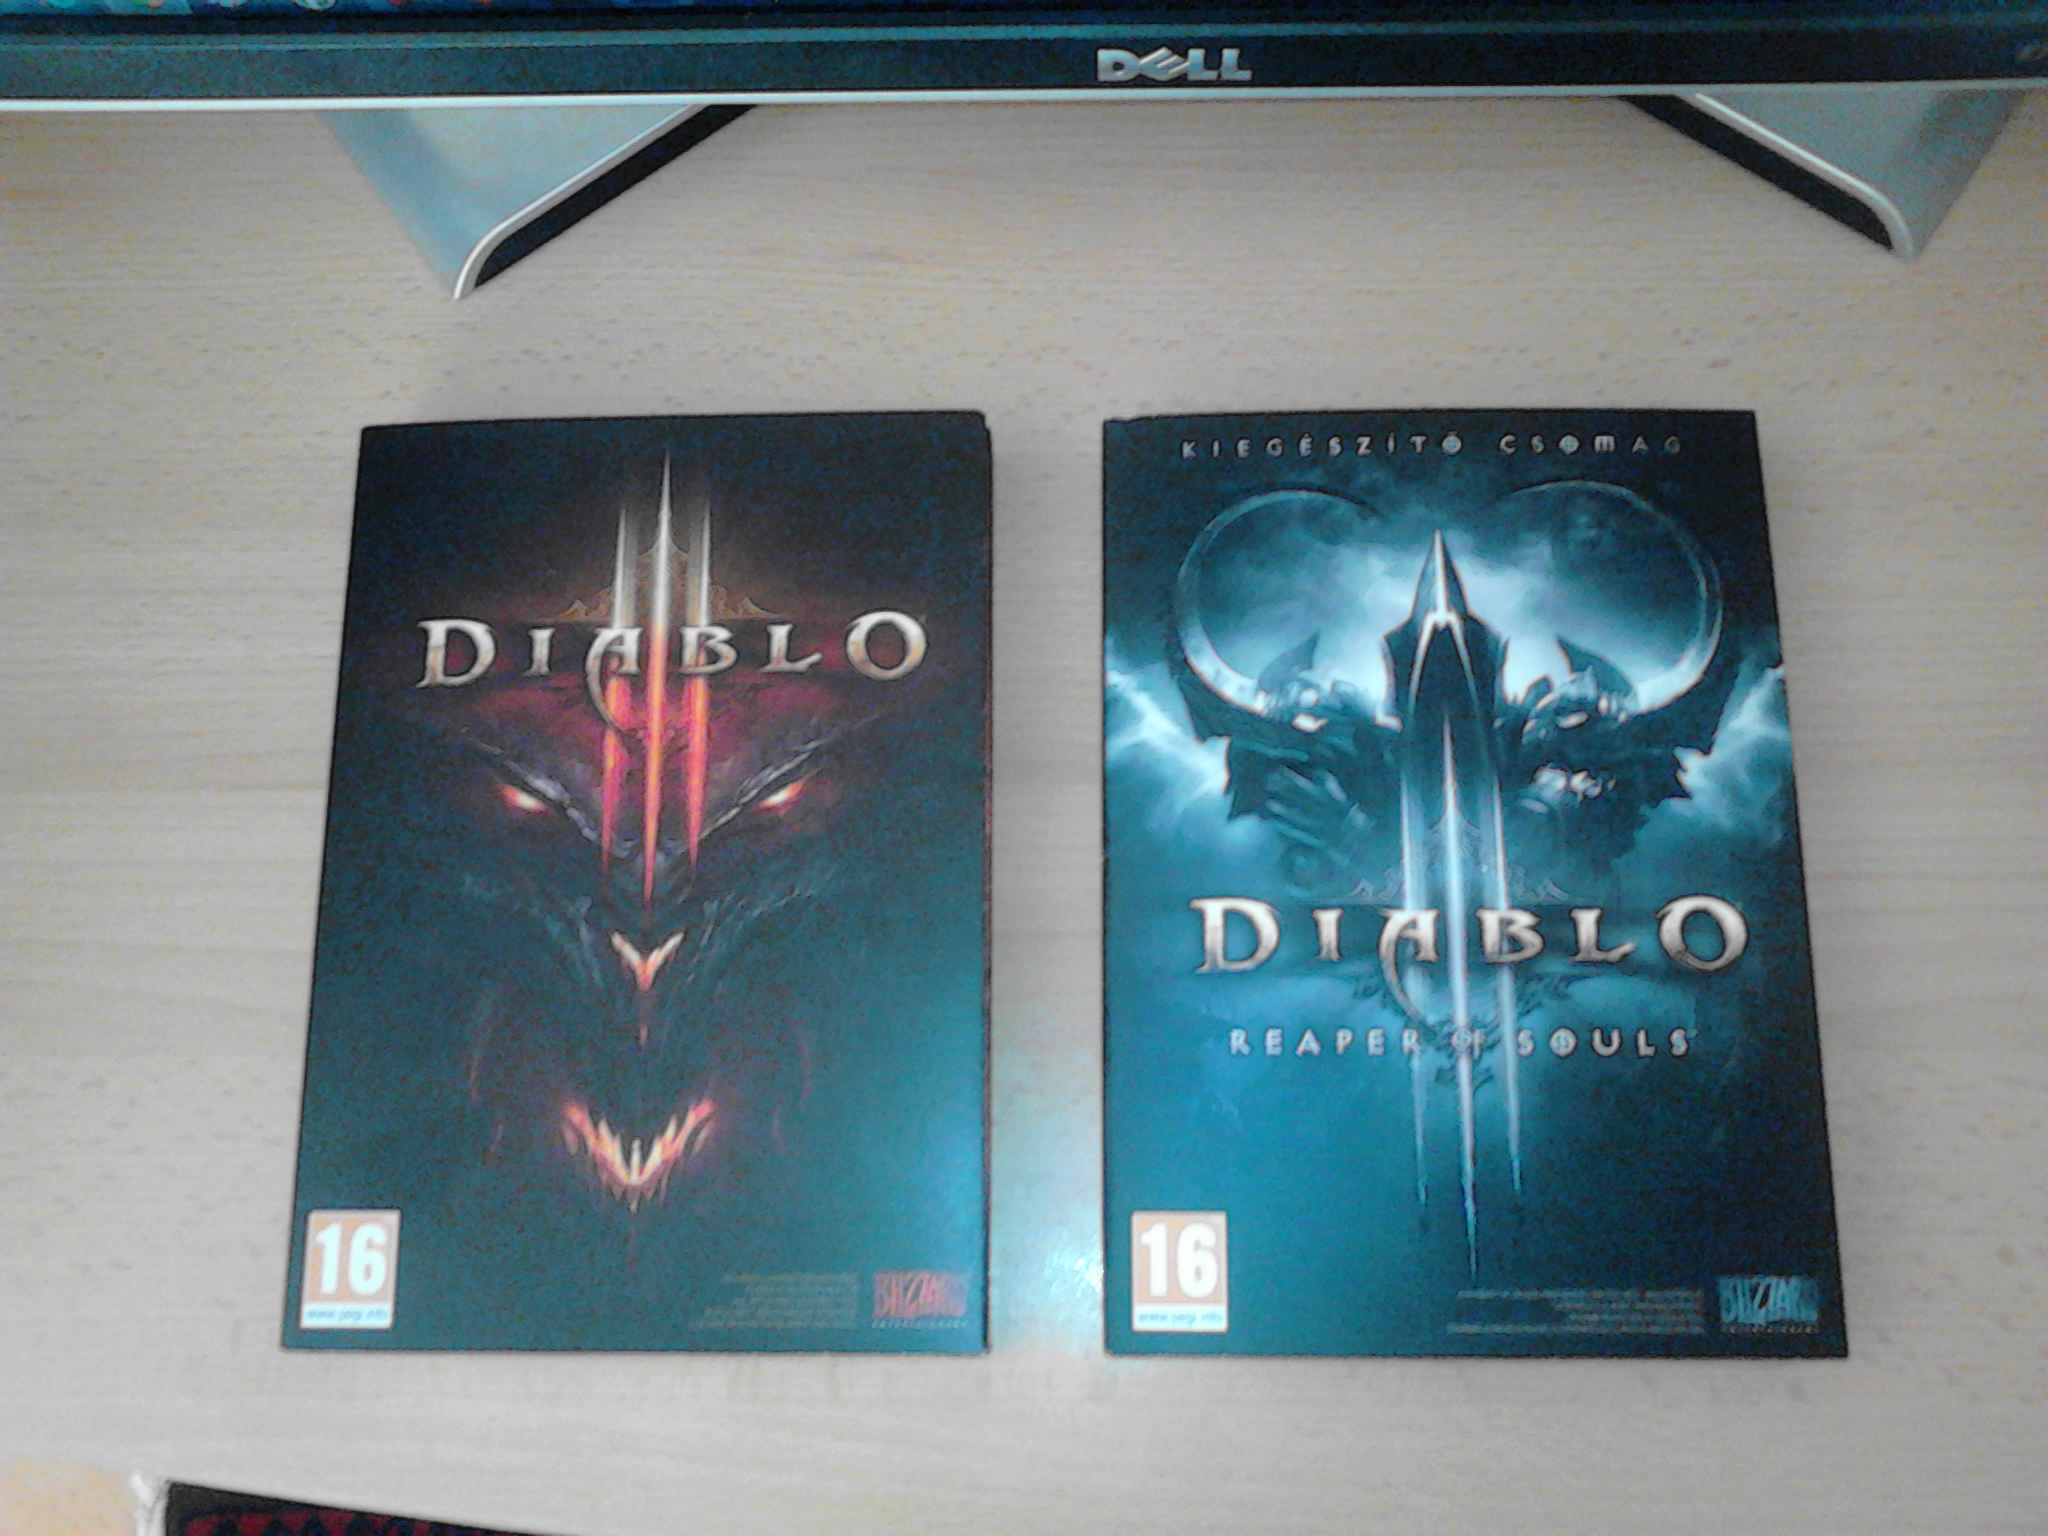 Diablo III: Reaper of Souls - Teszt - GAMEPOD.hu PC / PS3 / Xbox360 / PS4 /  Xbox One teszt